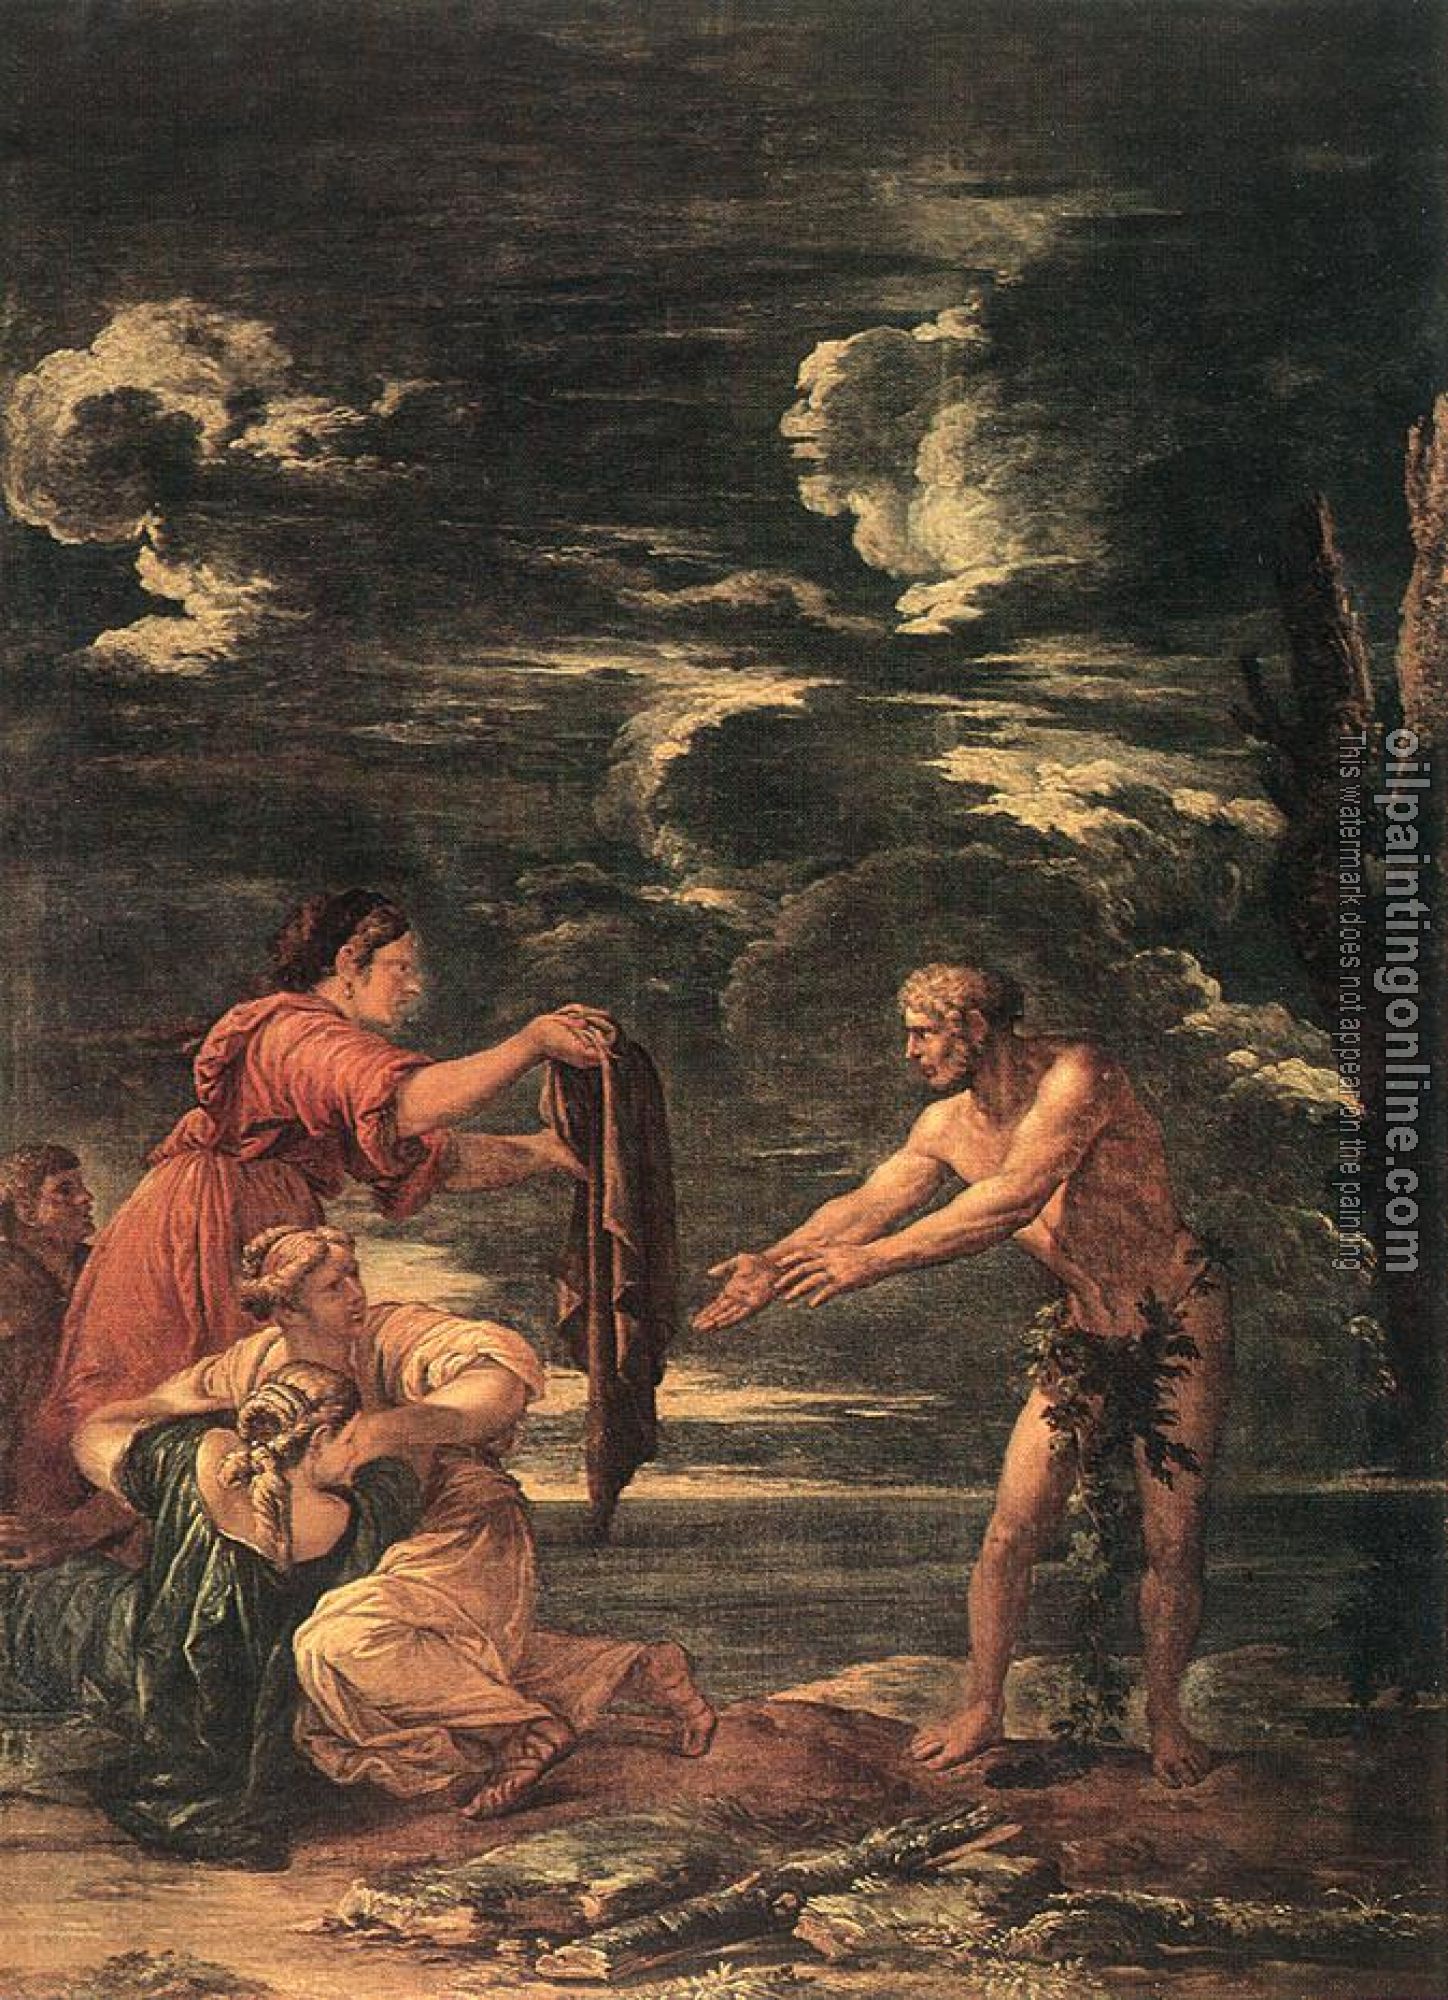 Rosa, Salvator - Odysseus and Nausicaa